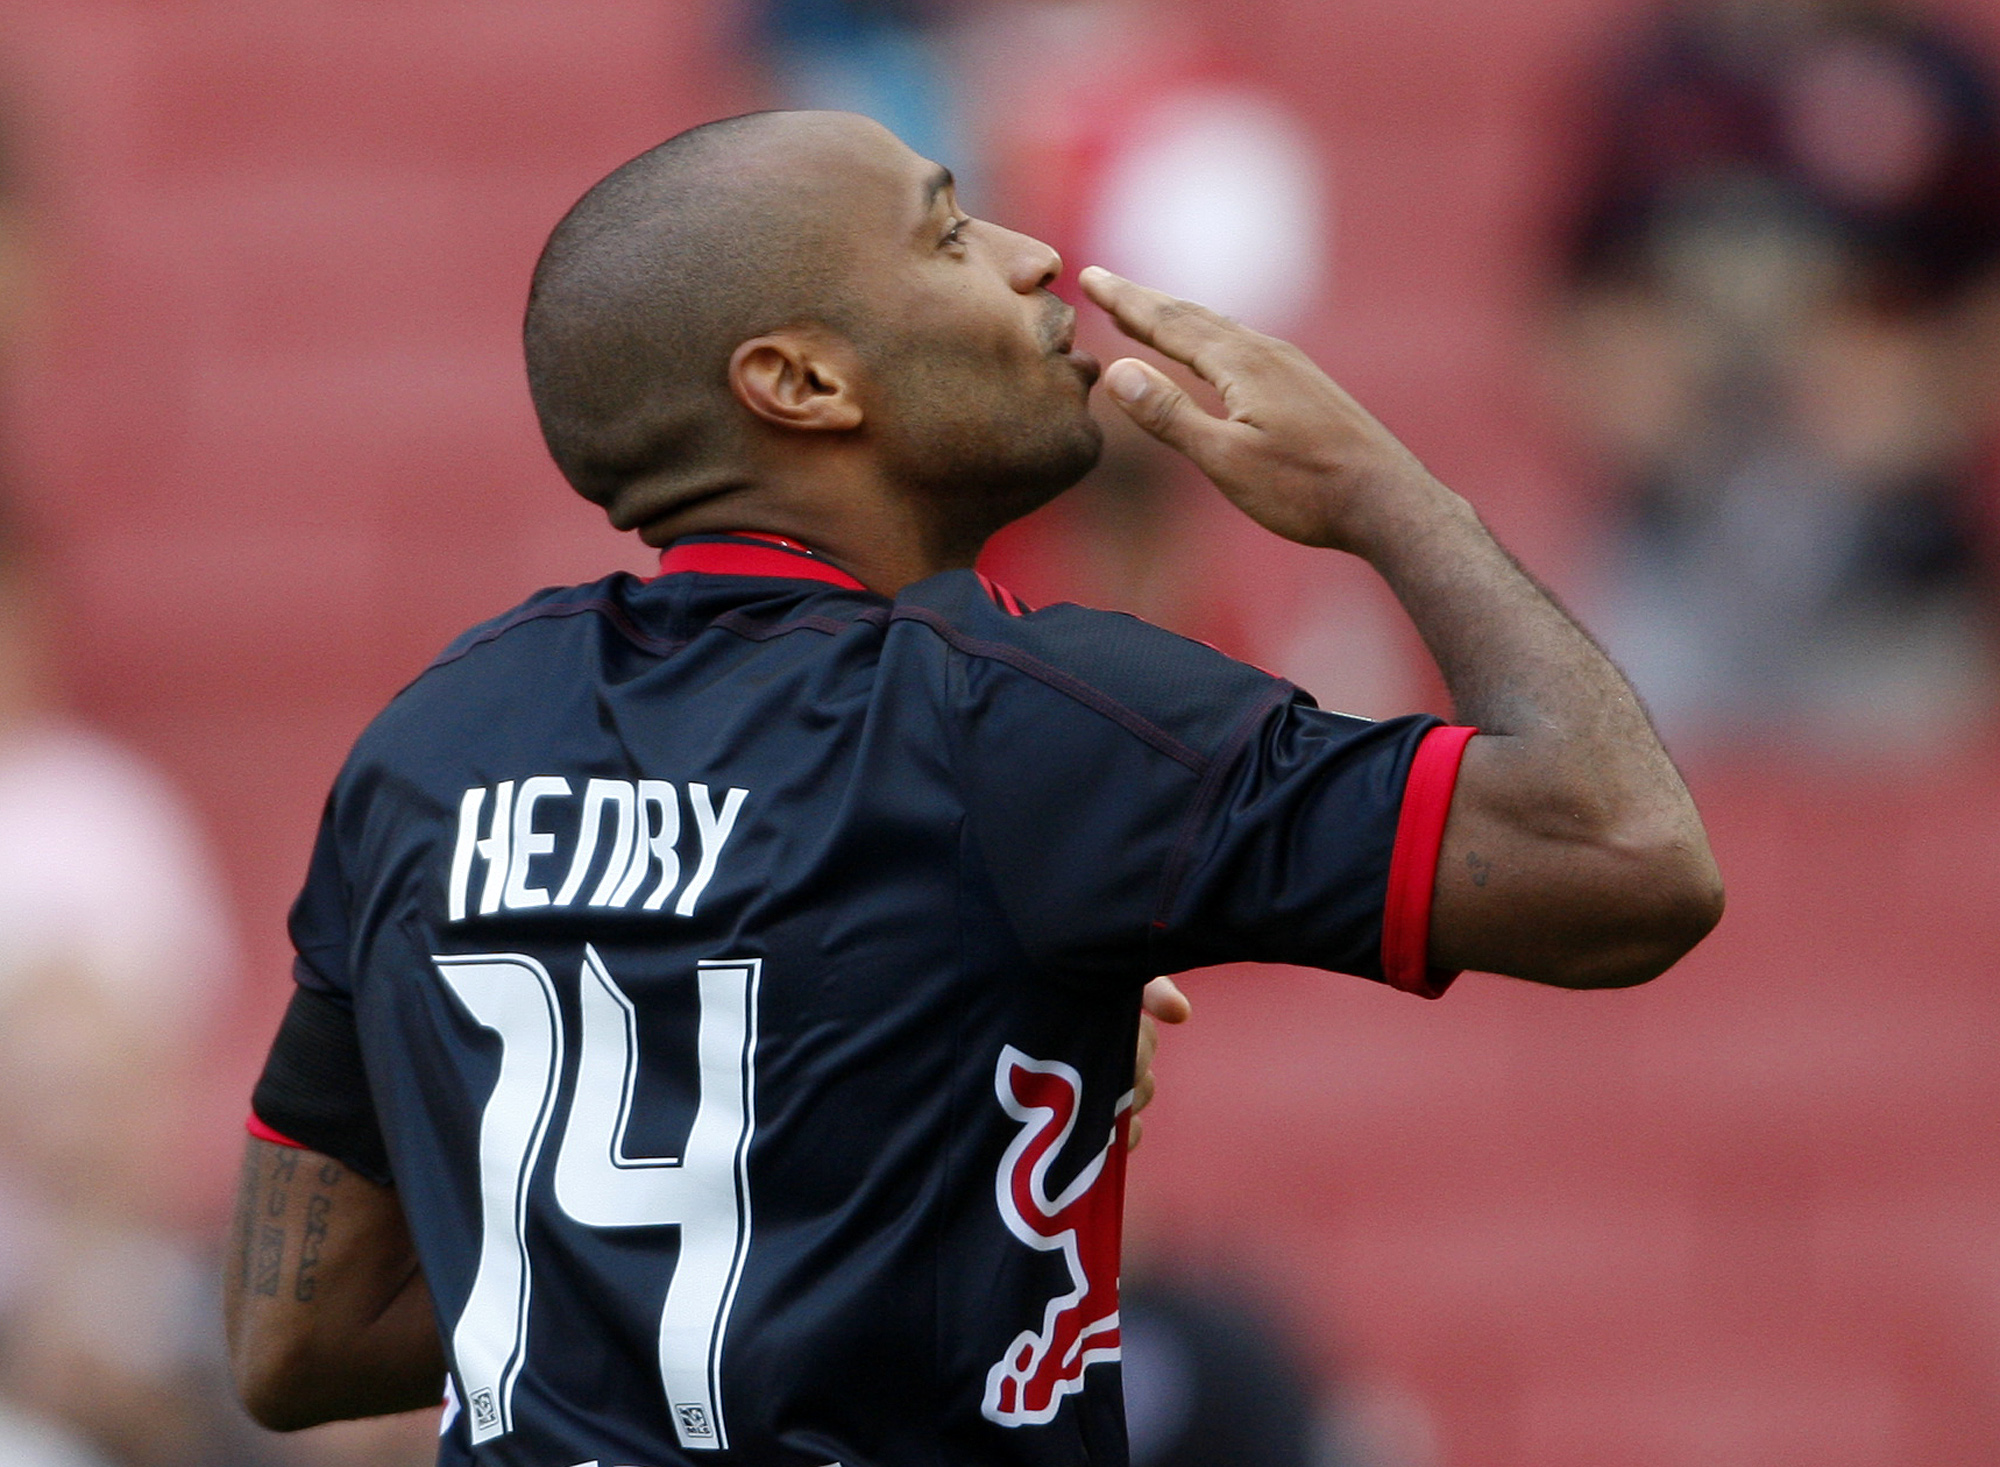 Premier League, Thierry Henry, emirates stadium, Arsenal, New York Red Bulls